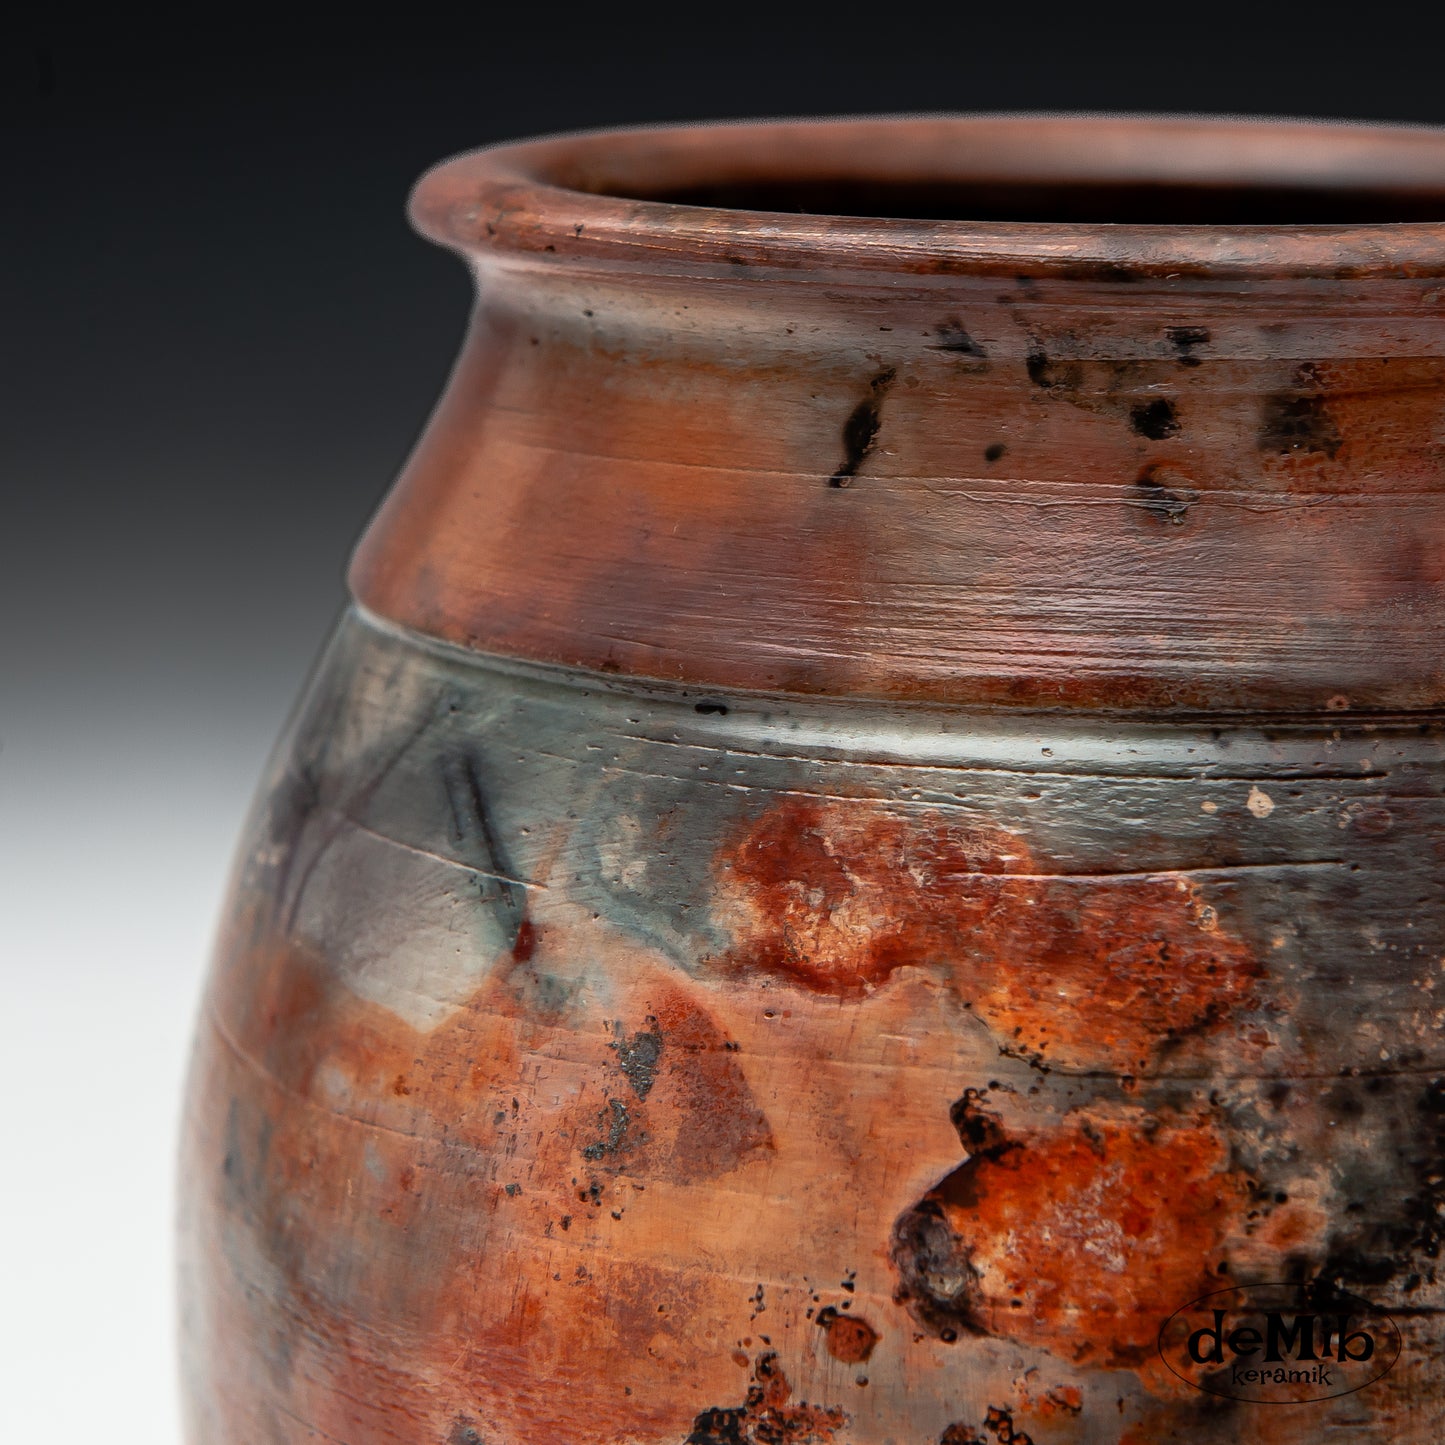 Pitfired Vase in Vivid Colors (19 cm)